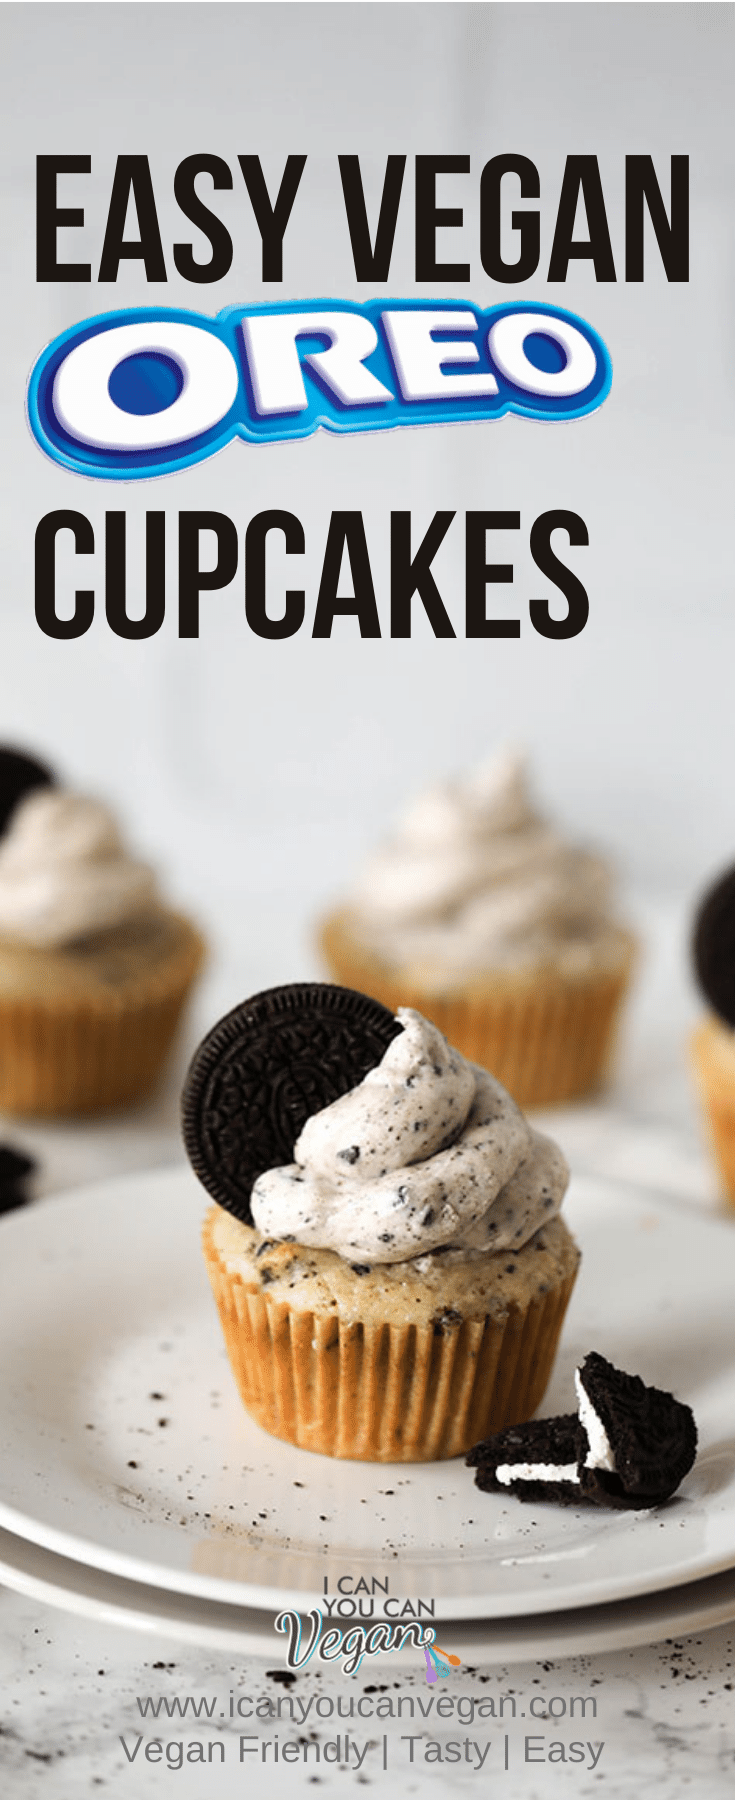 Easy Vegan Oreo Cupcakes- Pinterest